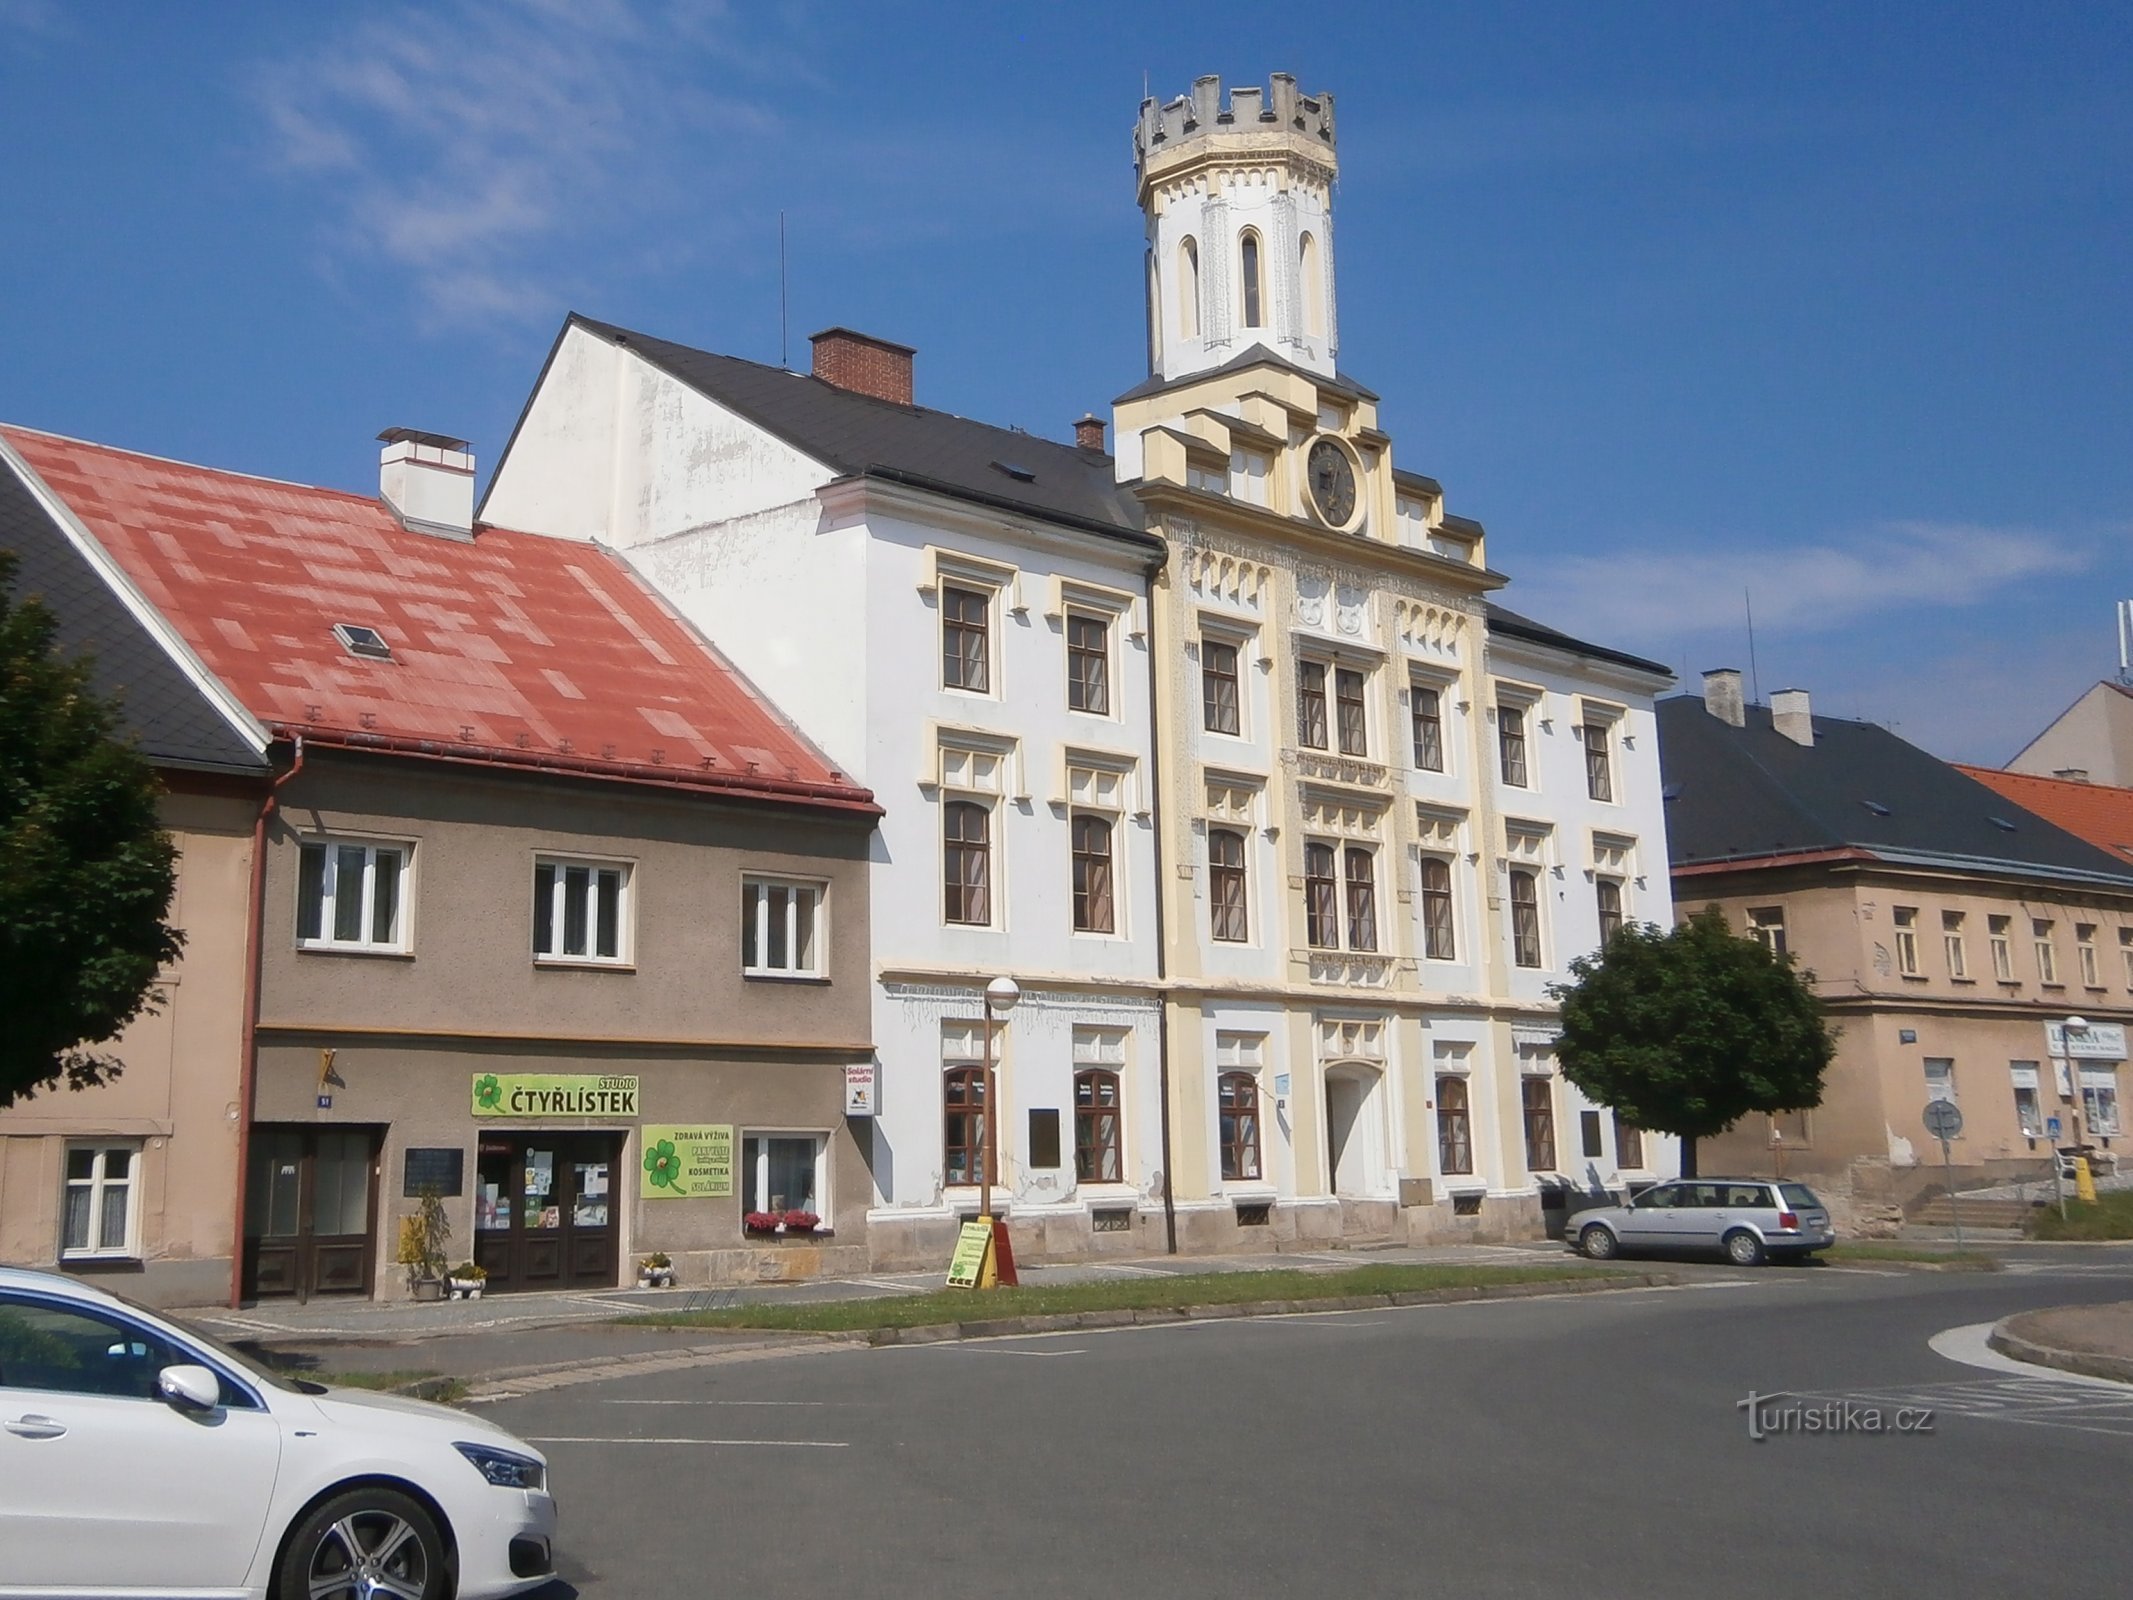 Old Town Hall No. 1 (Česká Skalice)